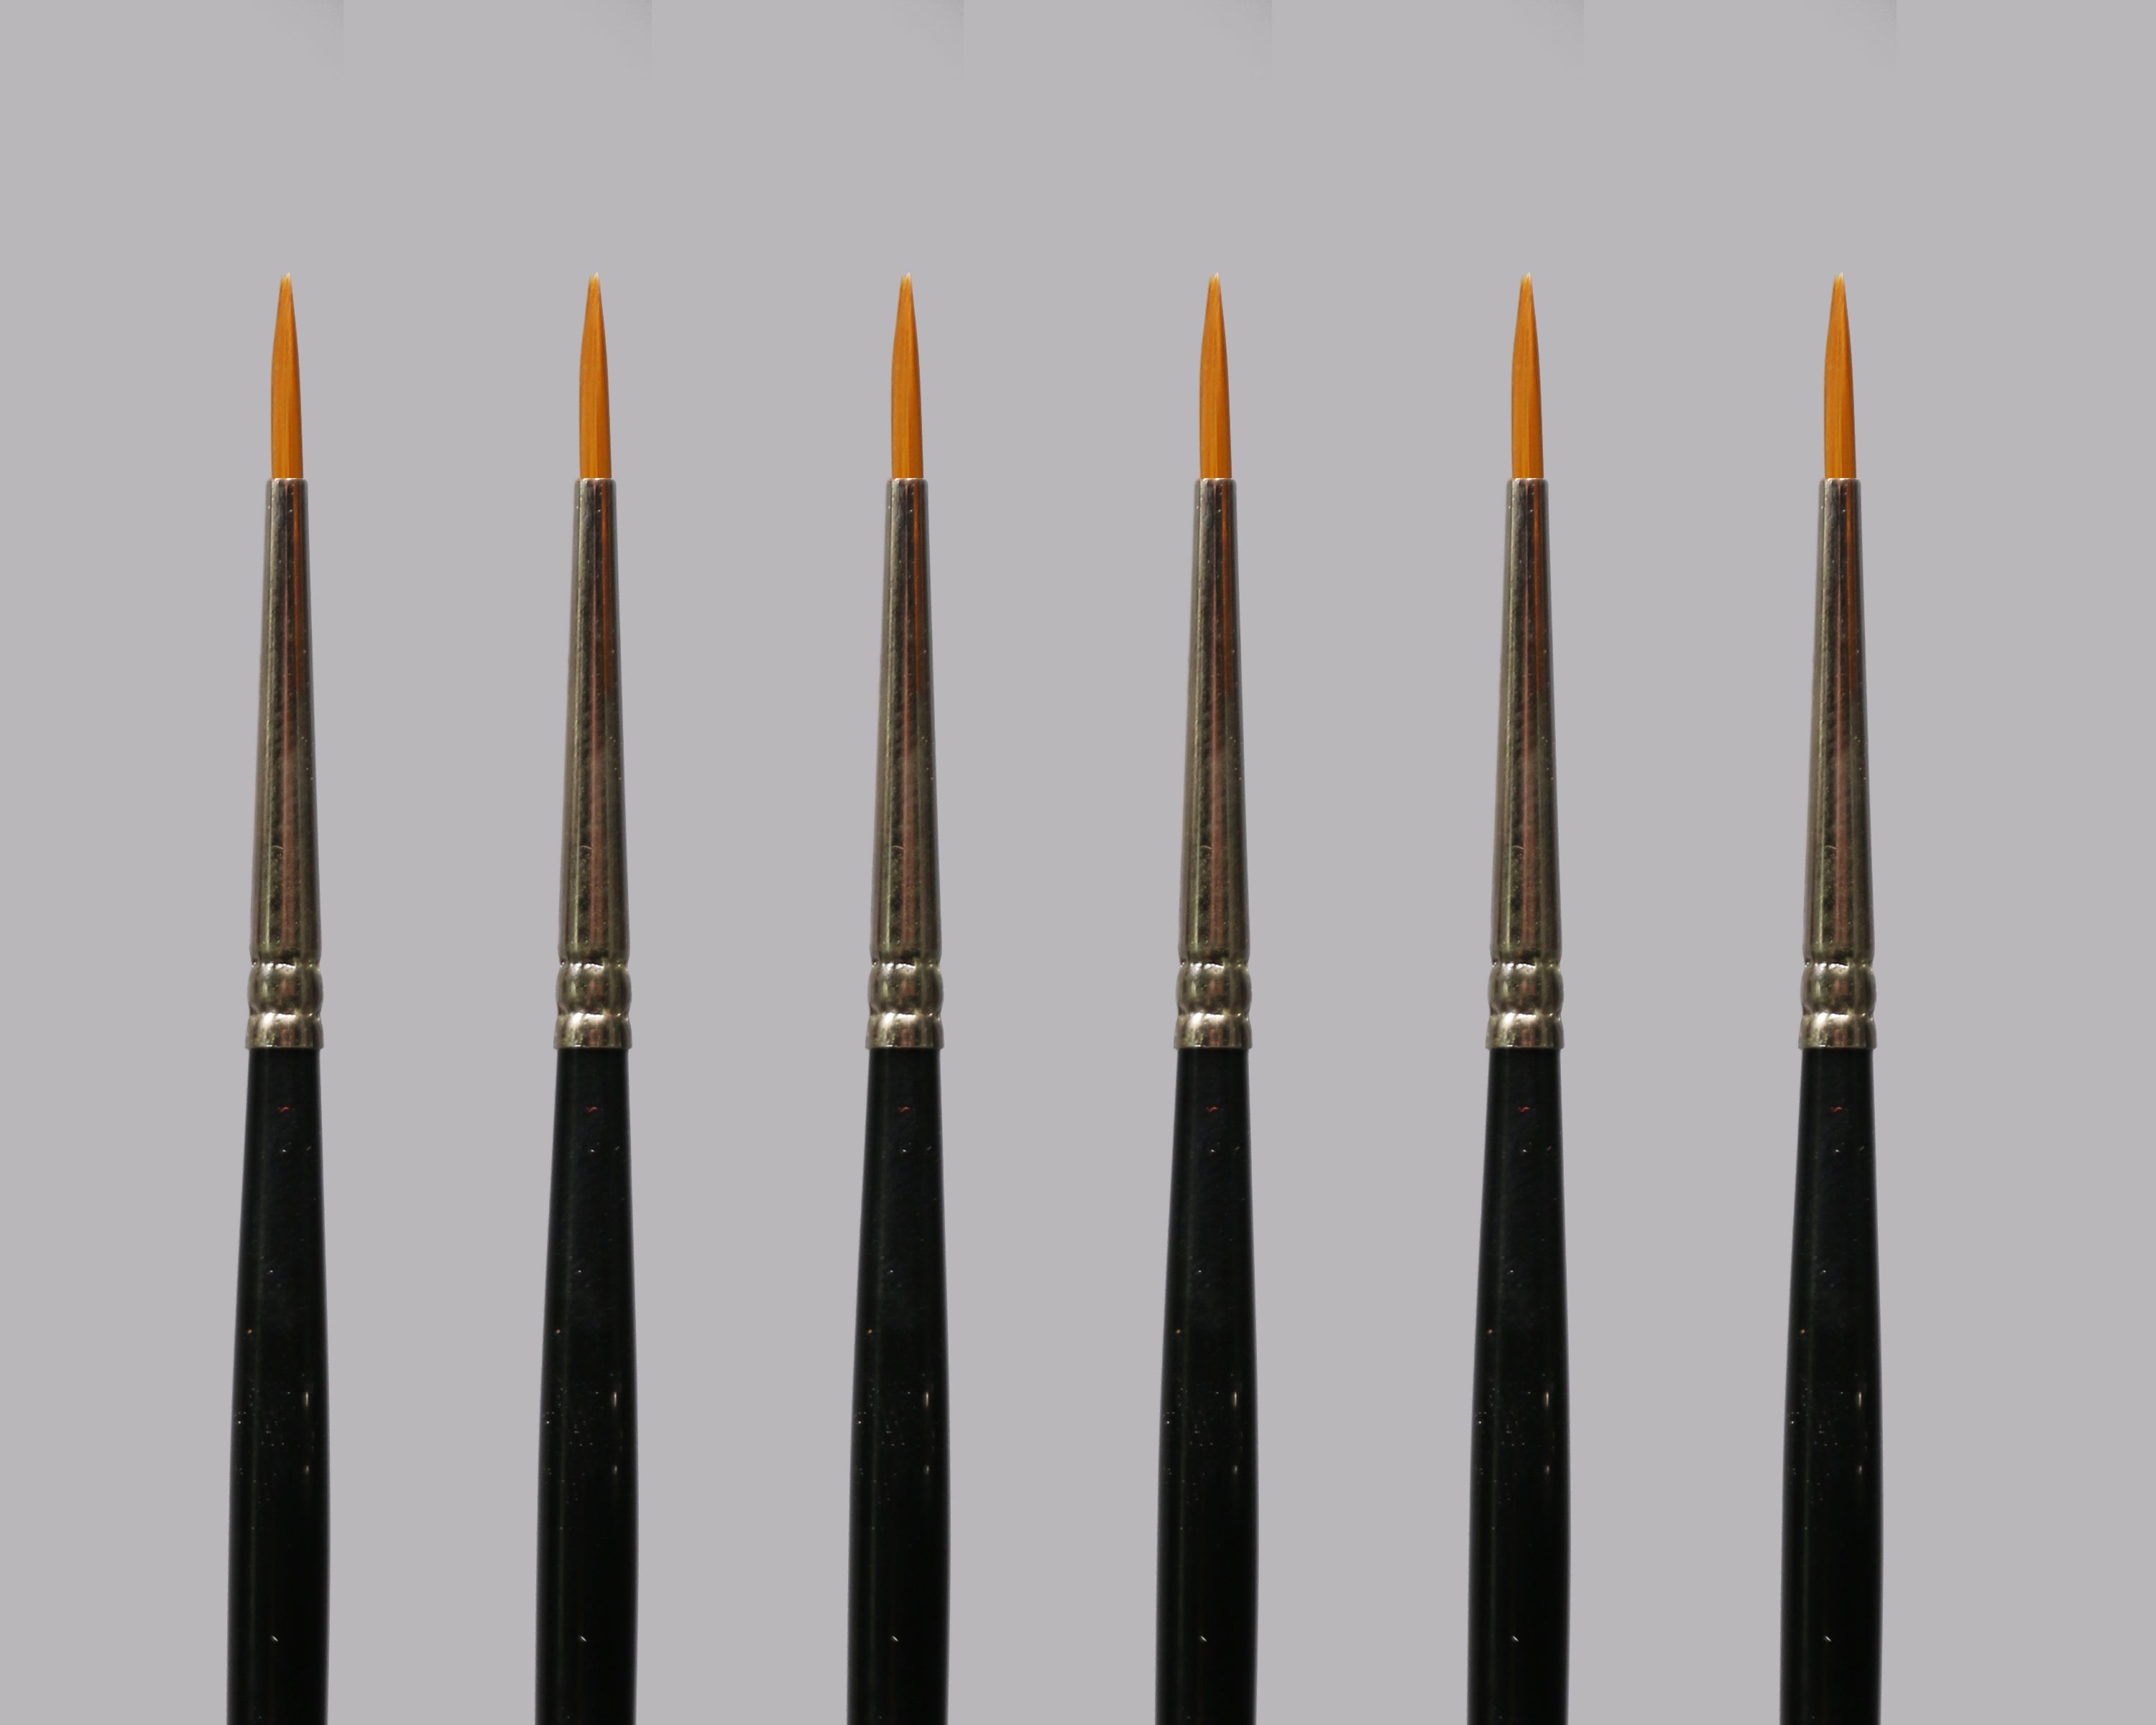 6 Piece "Pointed Brush" Set - Series 2